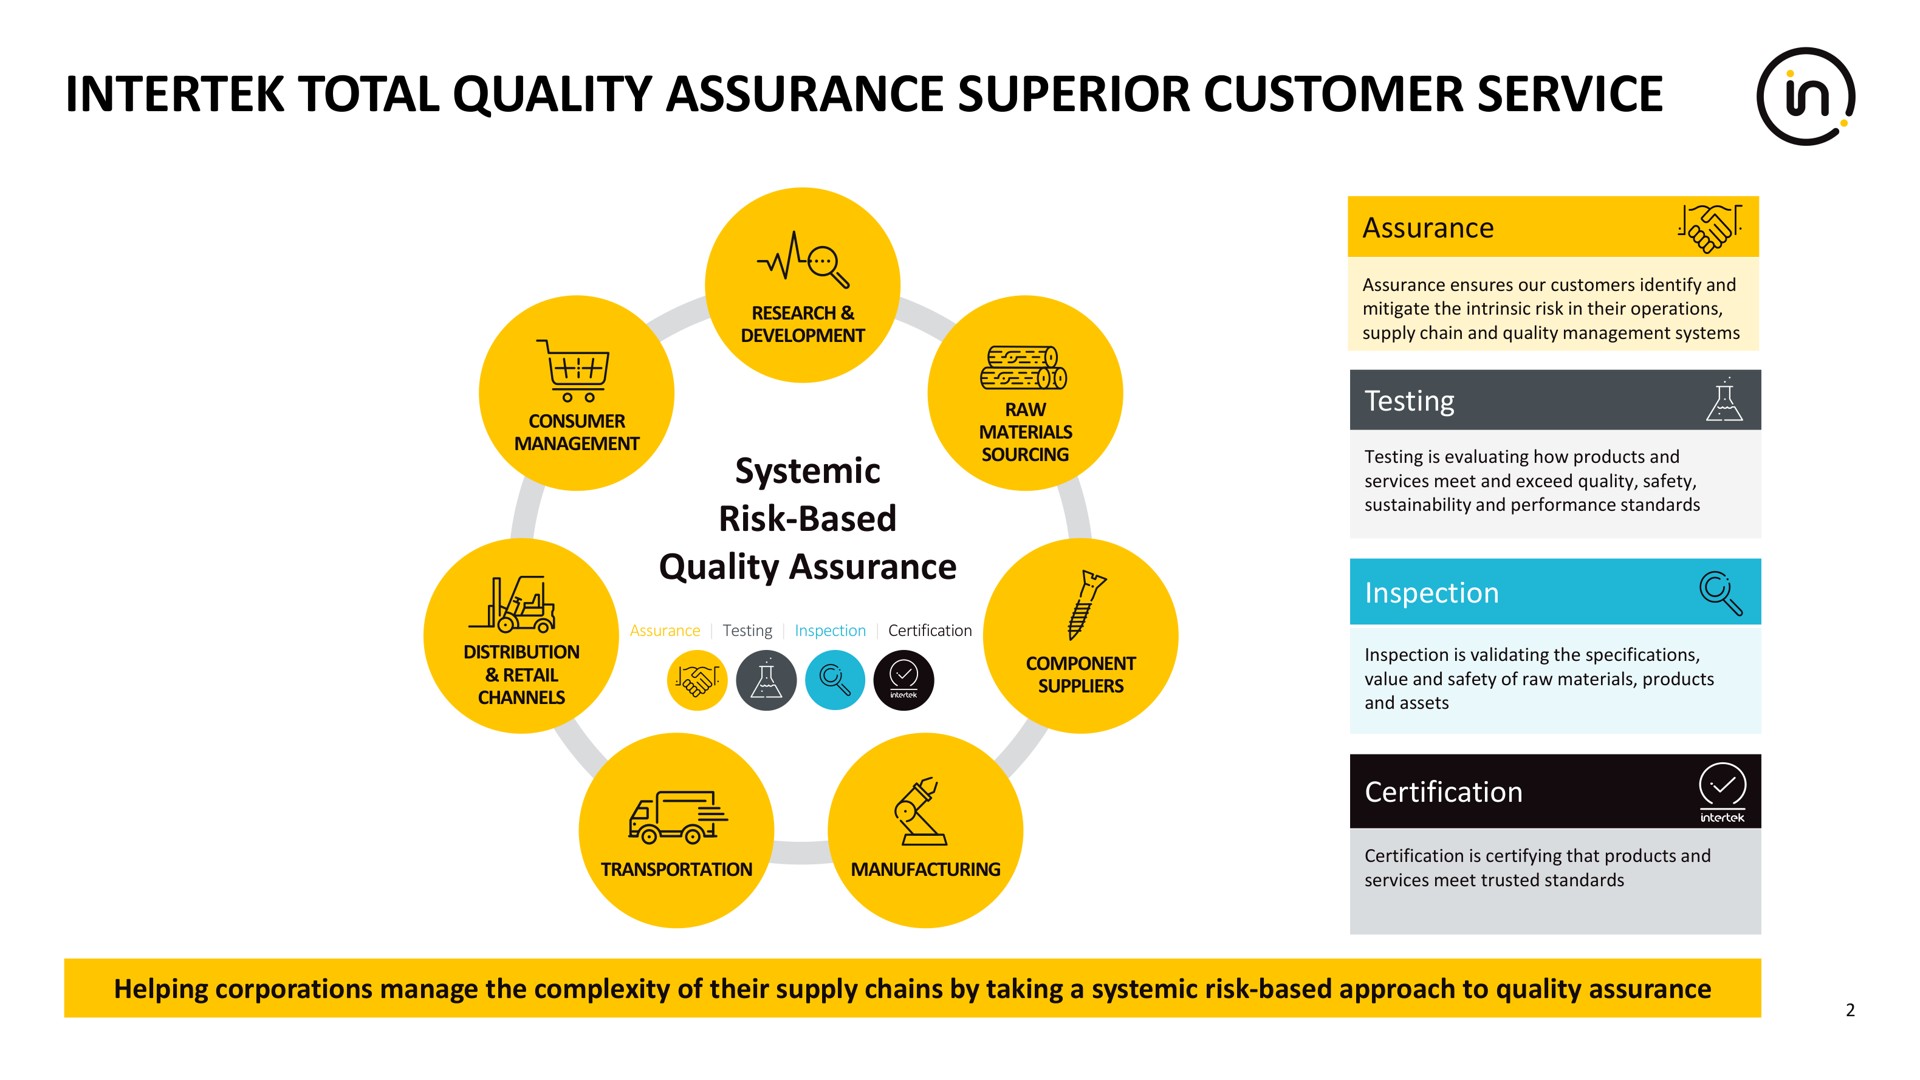 total quality assurance superior customer service component | Intertek